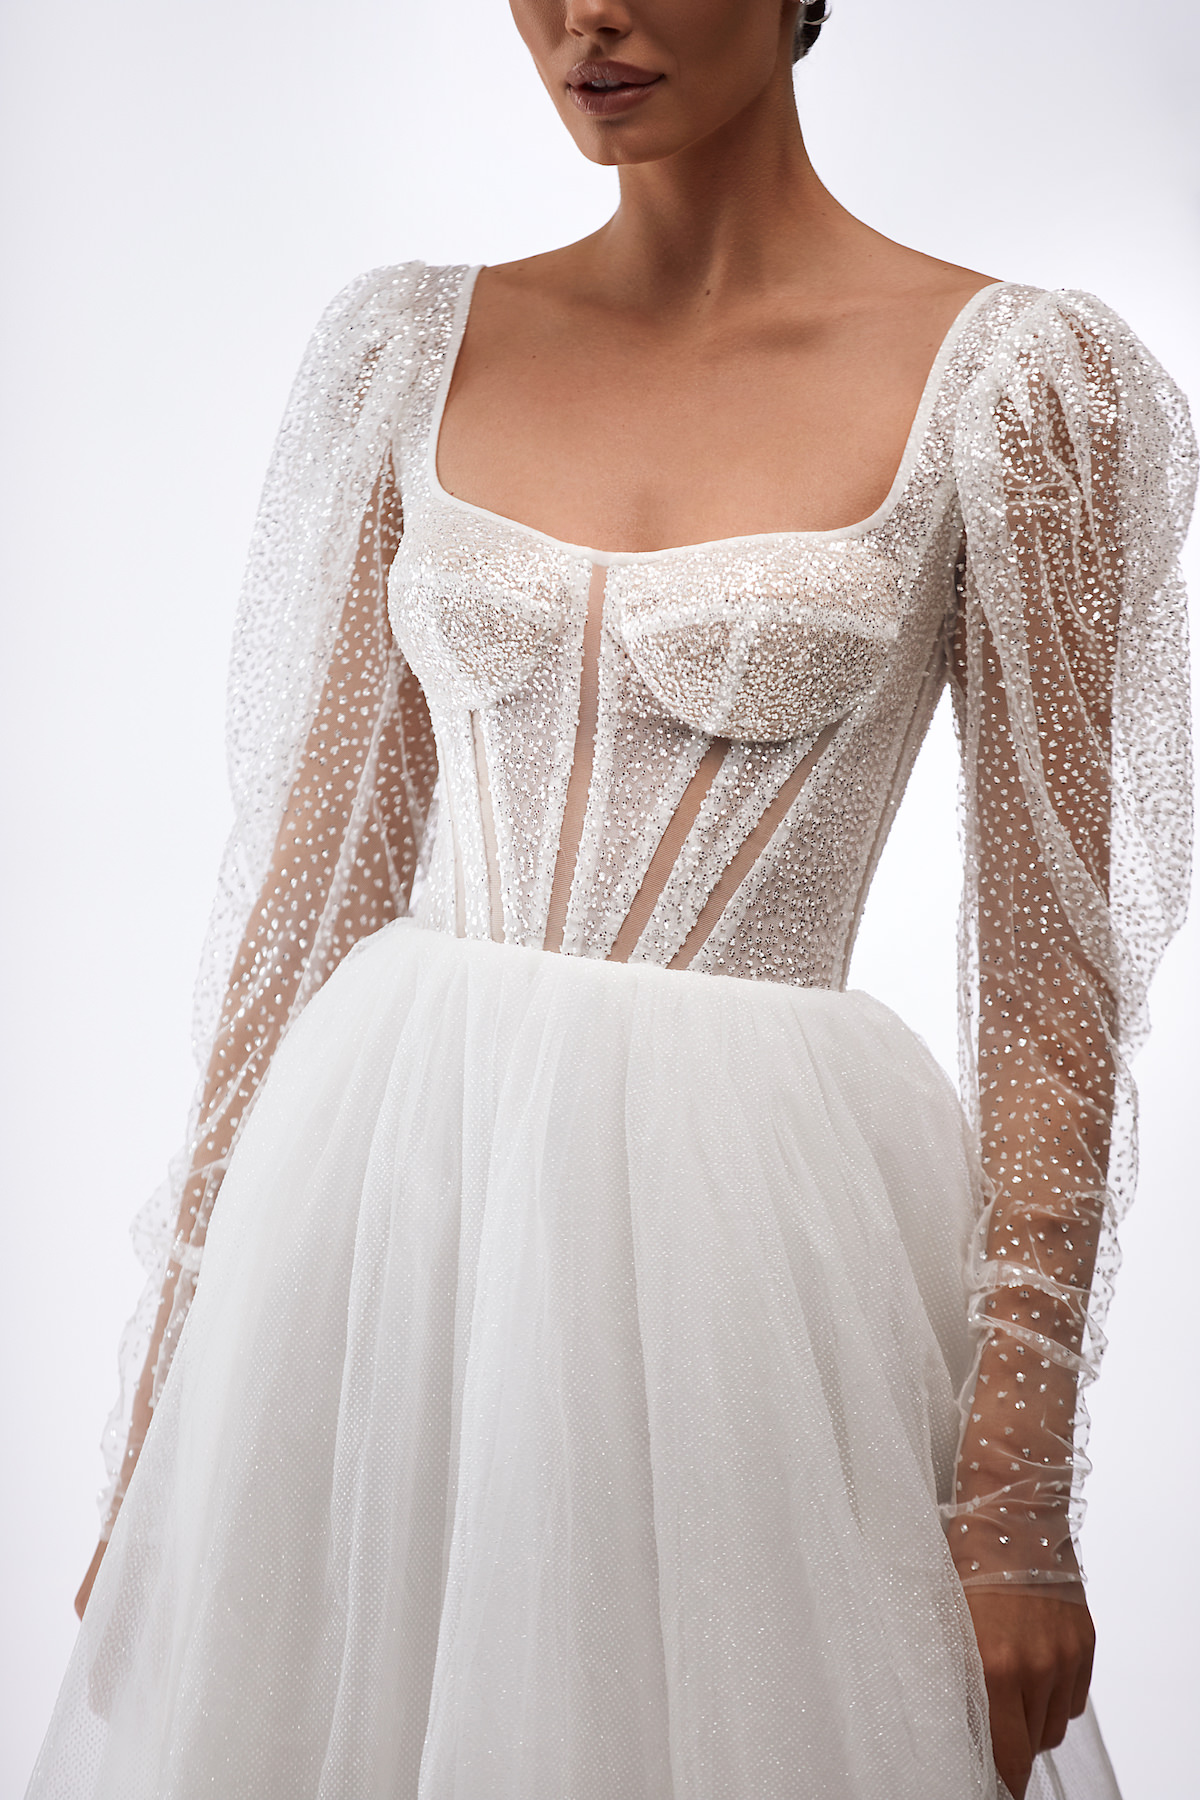 2022 Wedding Dress Trends by Milla Nova - Gabi White Lace